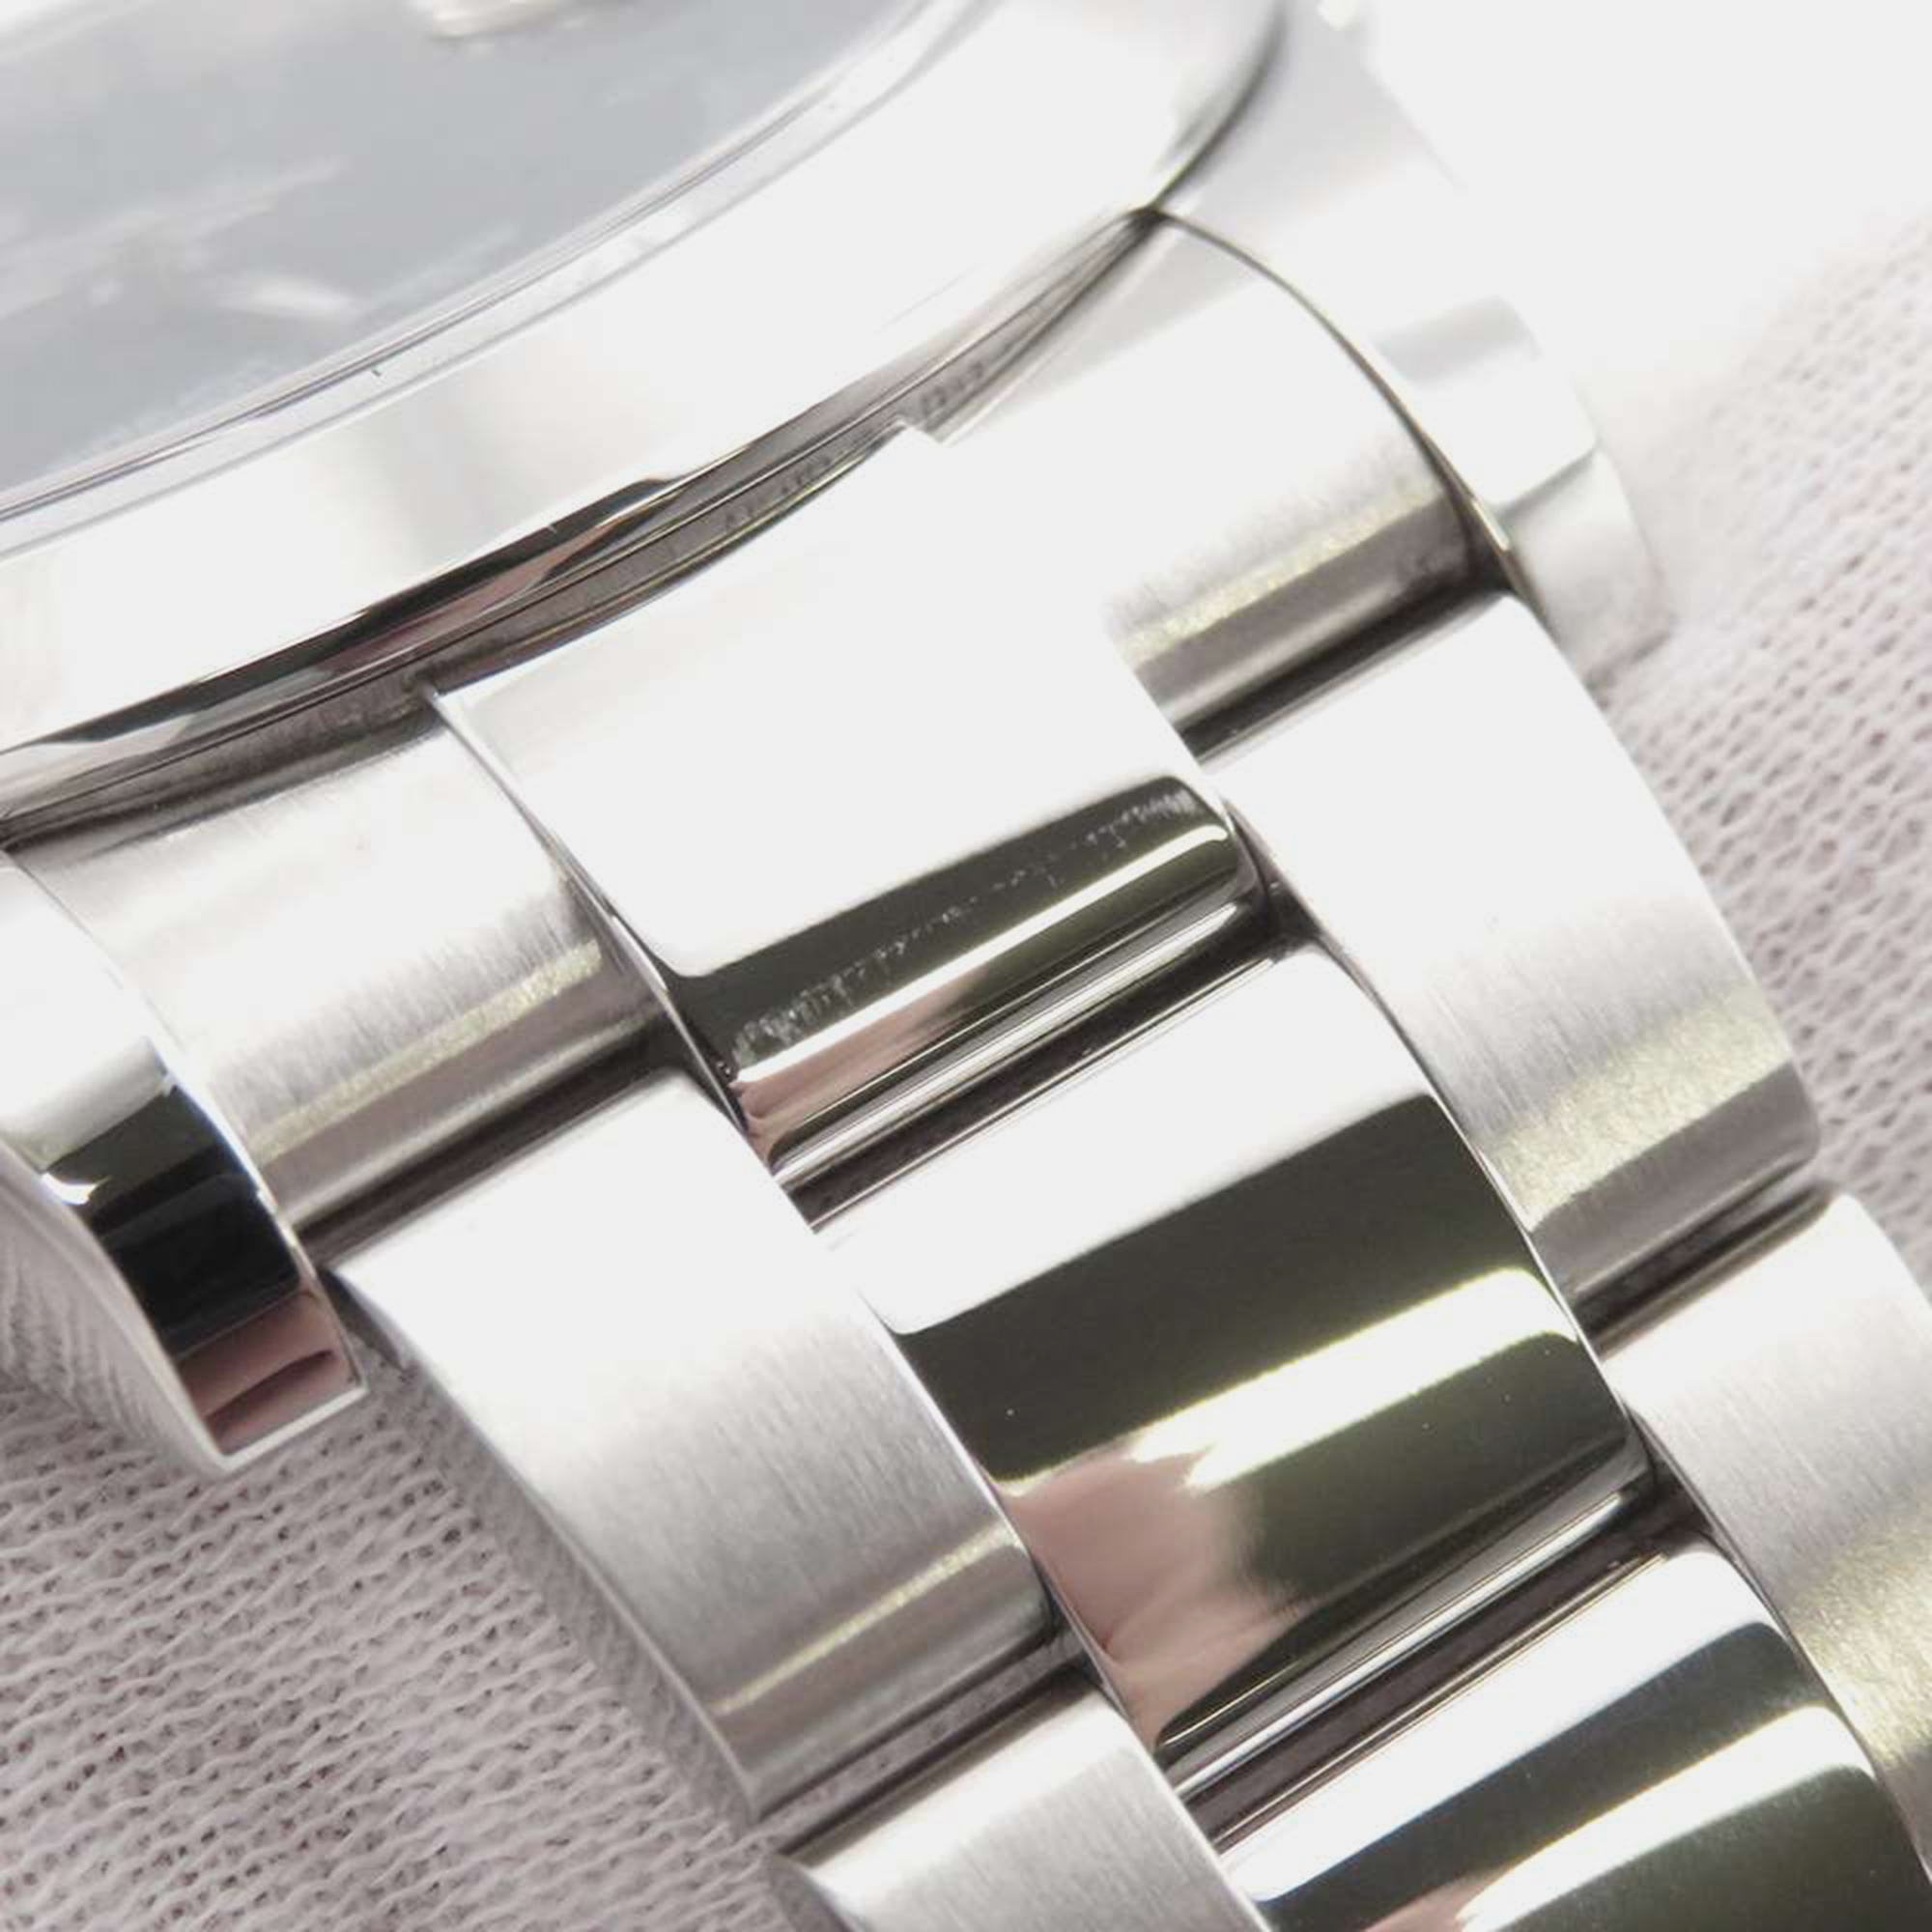 Rolex Black Stainless Steel Datejust 116300 Automatic Men's Wristwatch 41 Mm